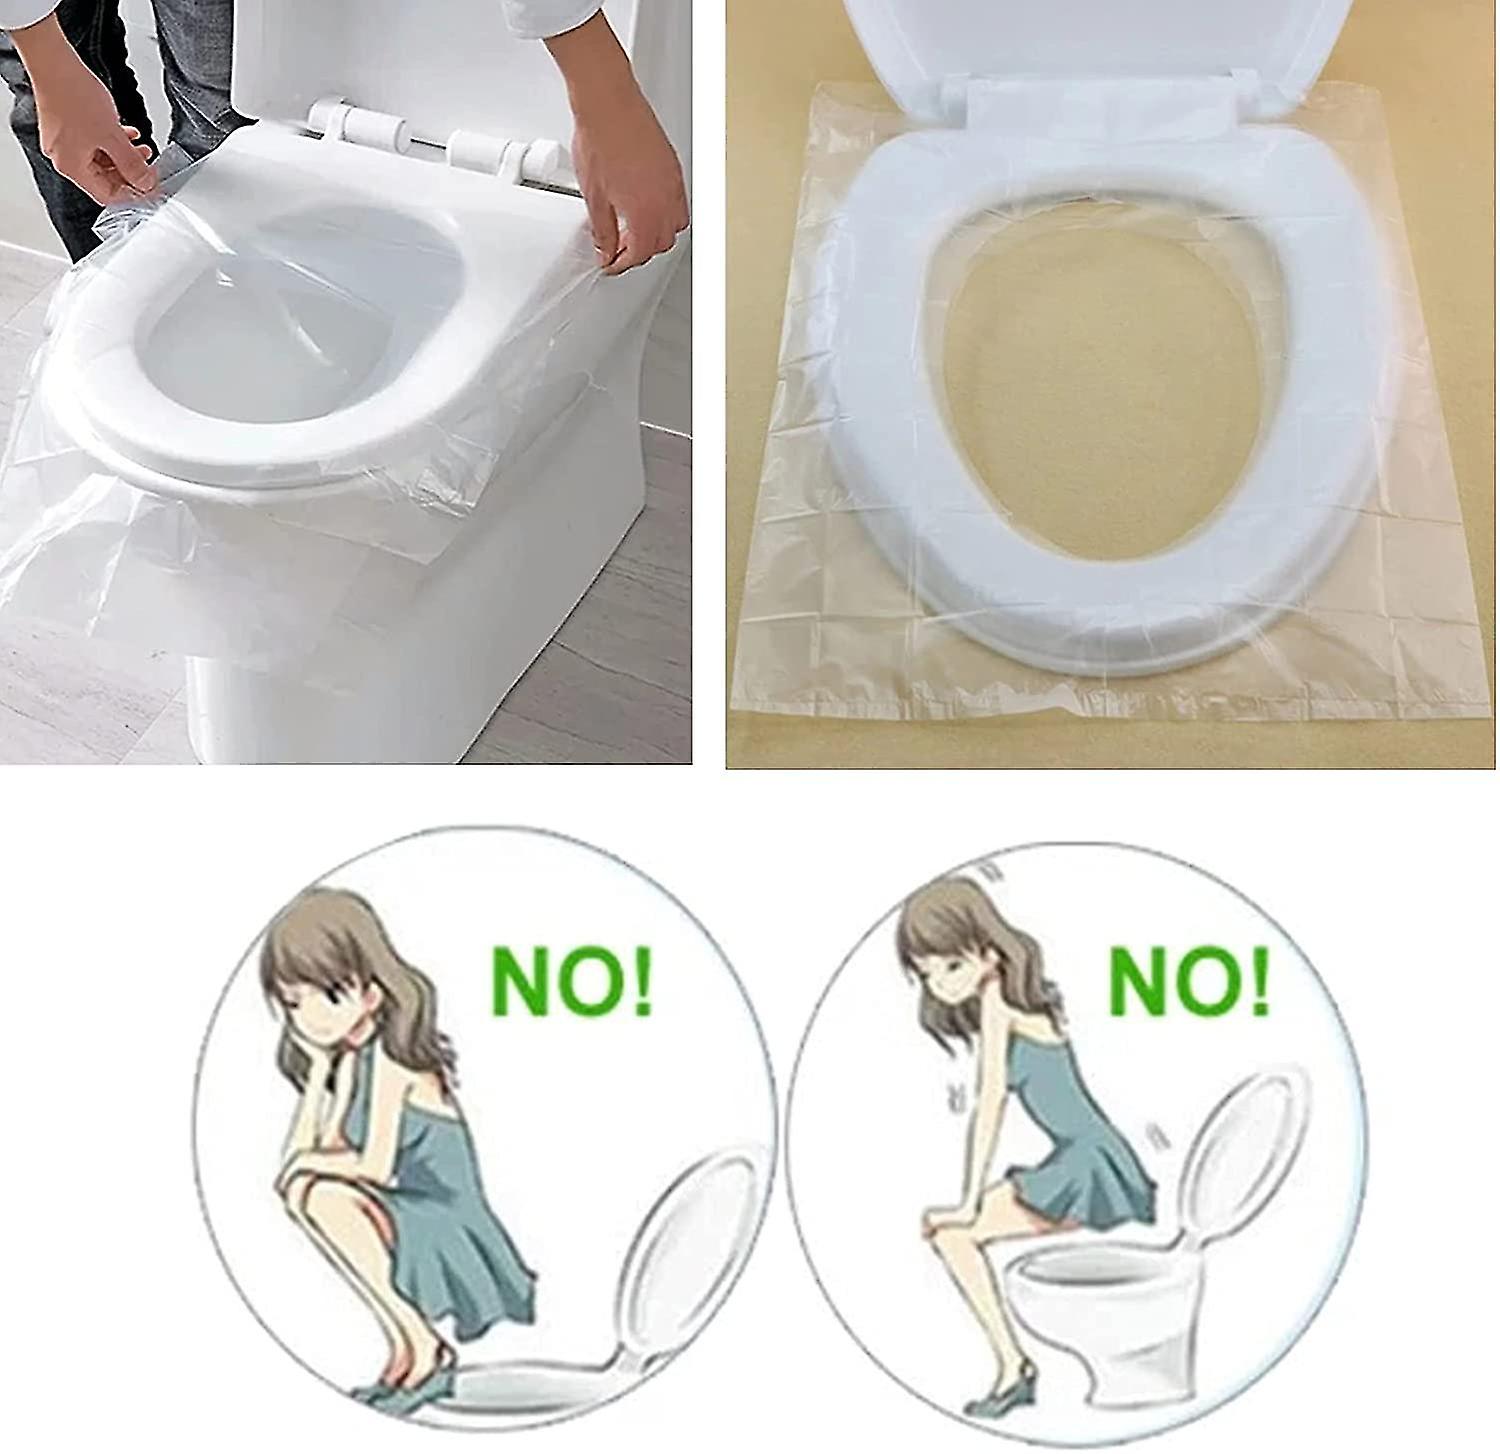 protège cuvette wc jetable, protège cuvette toilette, protège wc